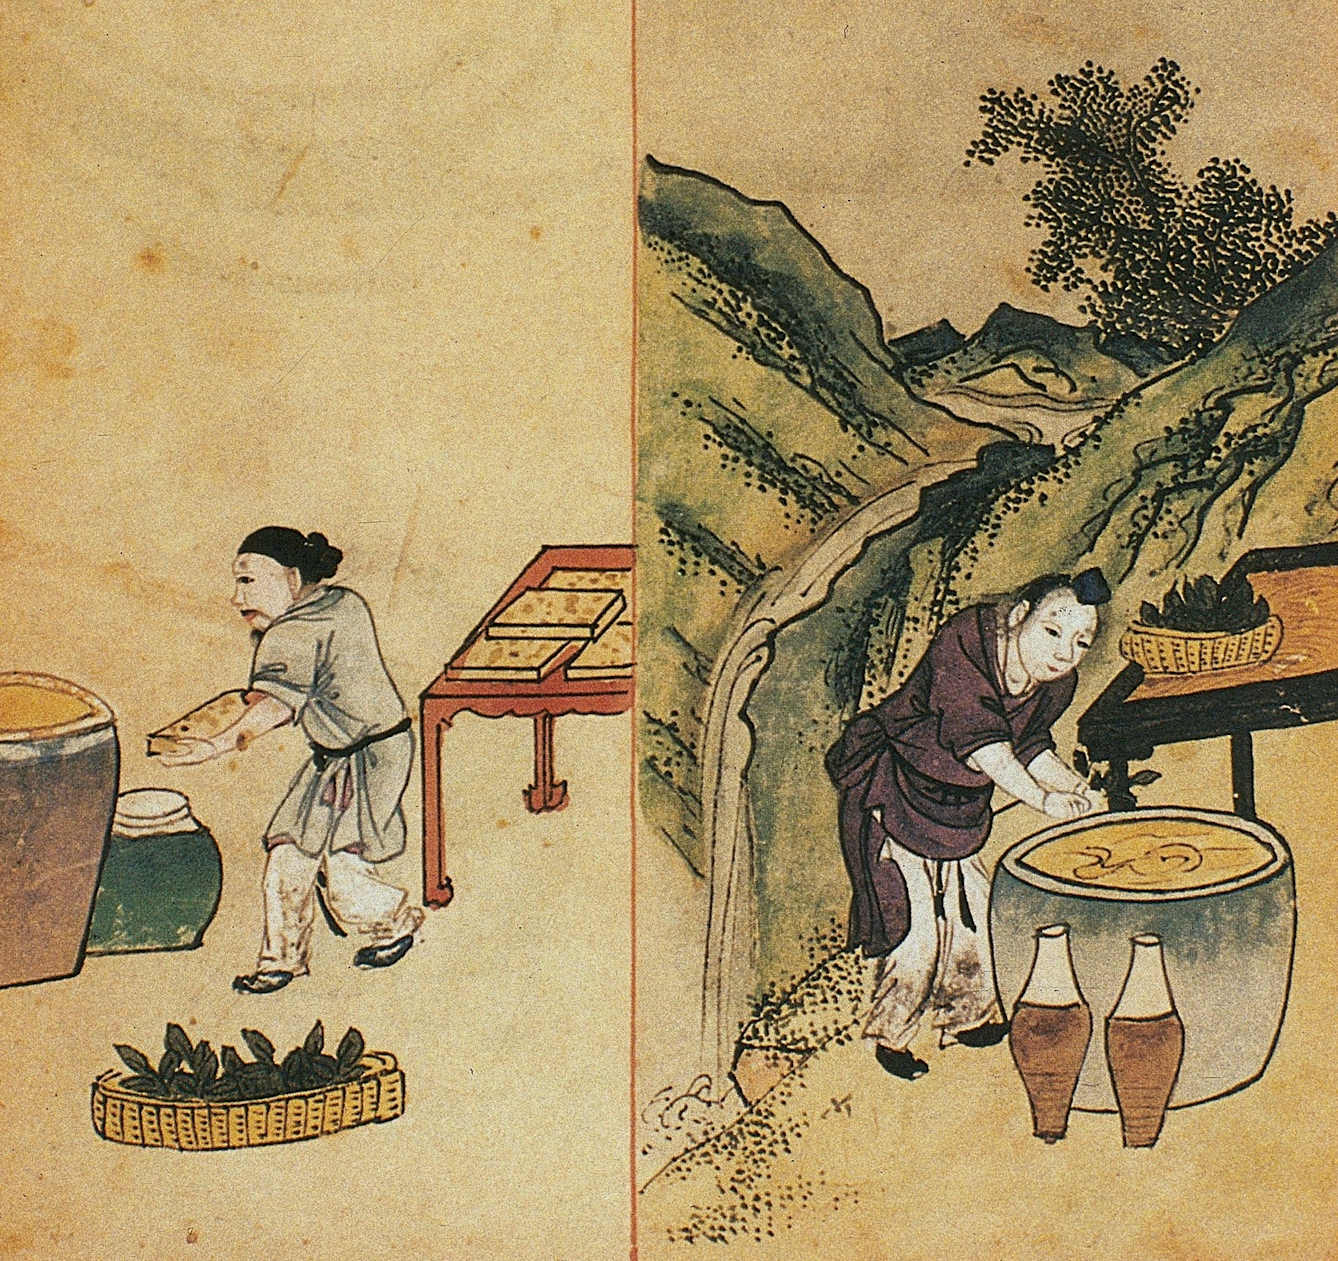 Chinese manuscript depicting images of two people preparing mung bean liquor.